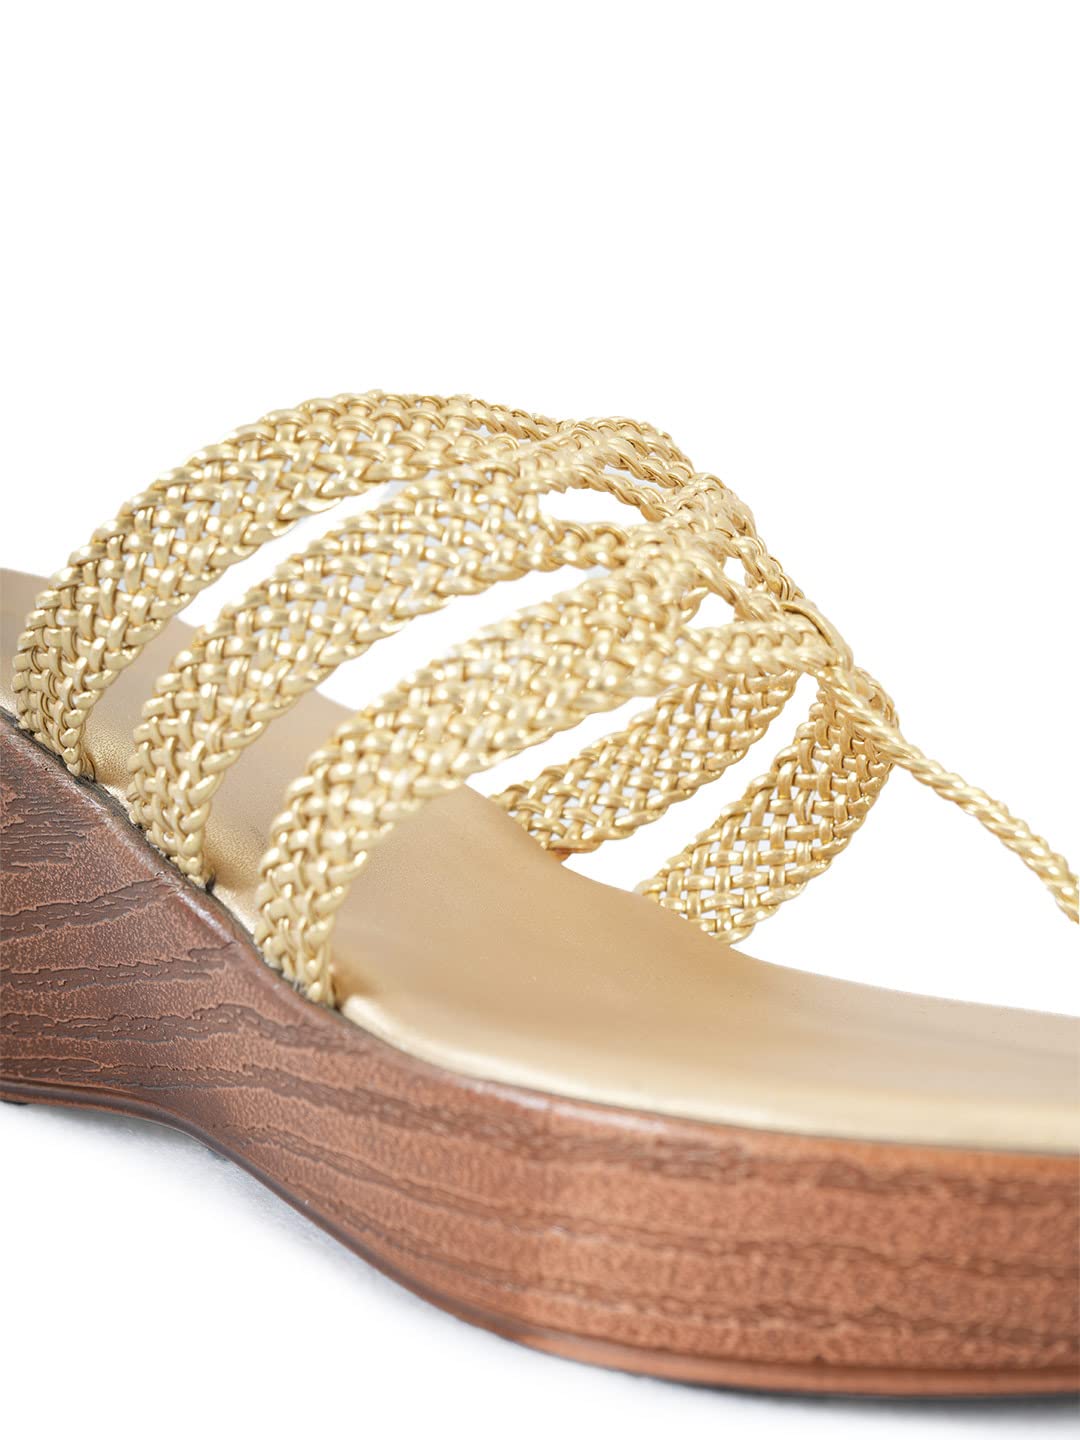 pelle albero Women Gold Embellished Slip-On Wedge Heels Sandals PA-GLM-08_GOLD_41